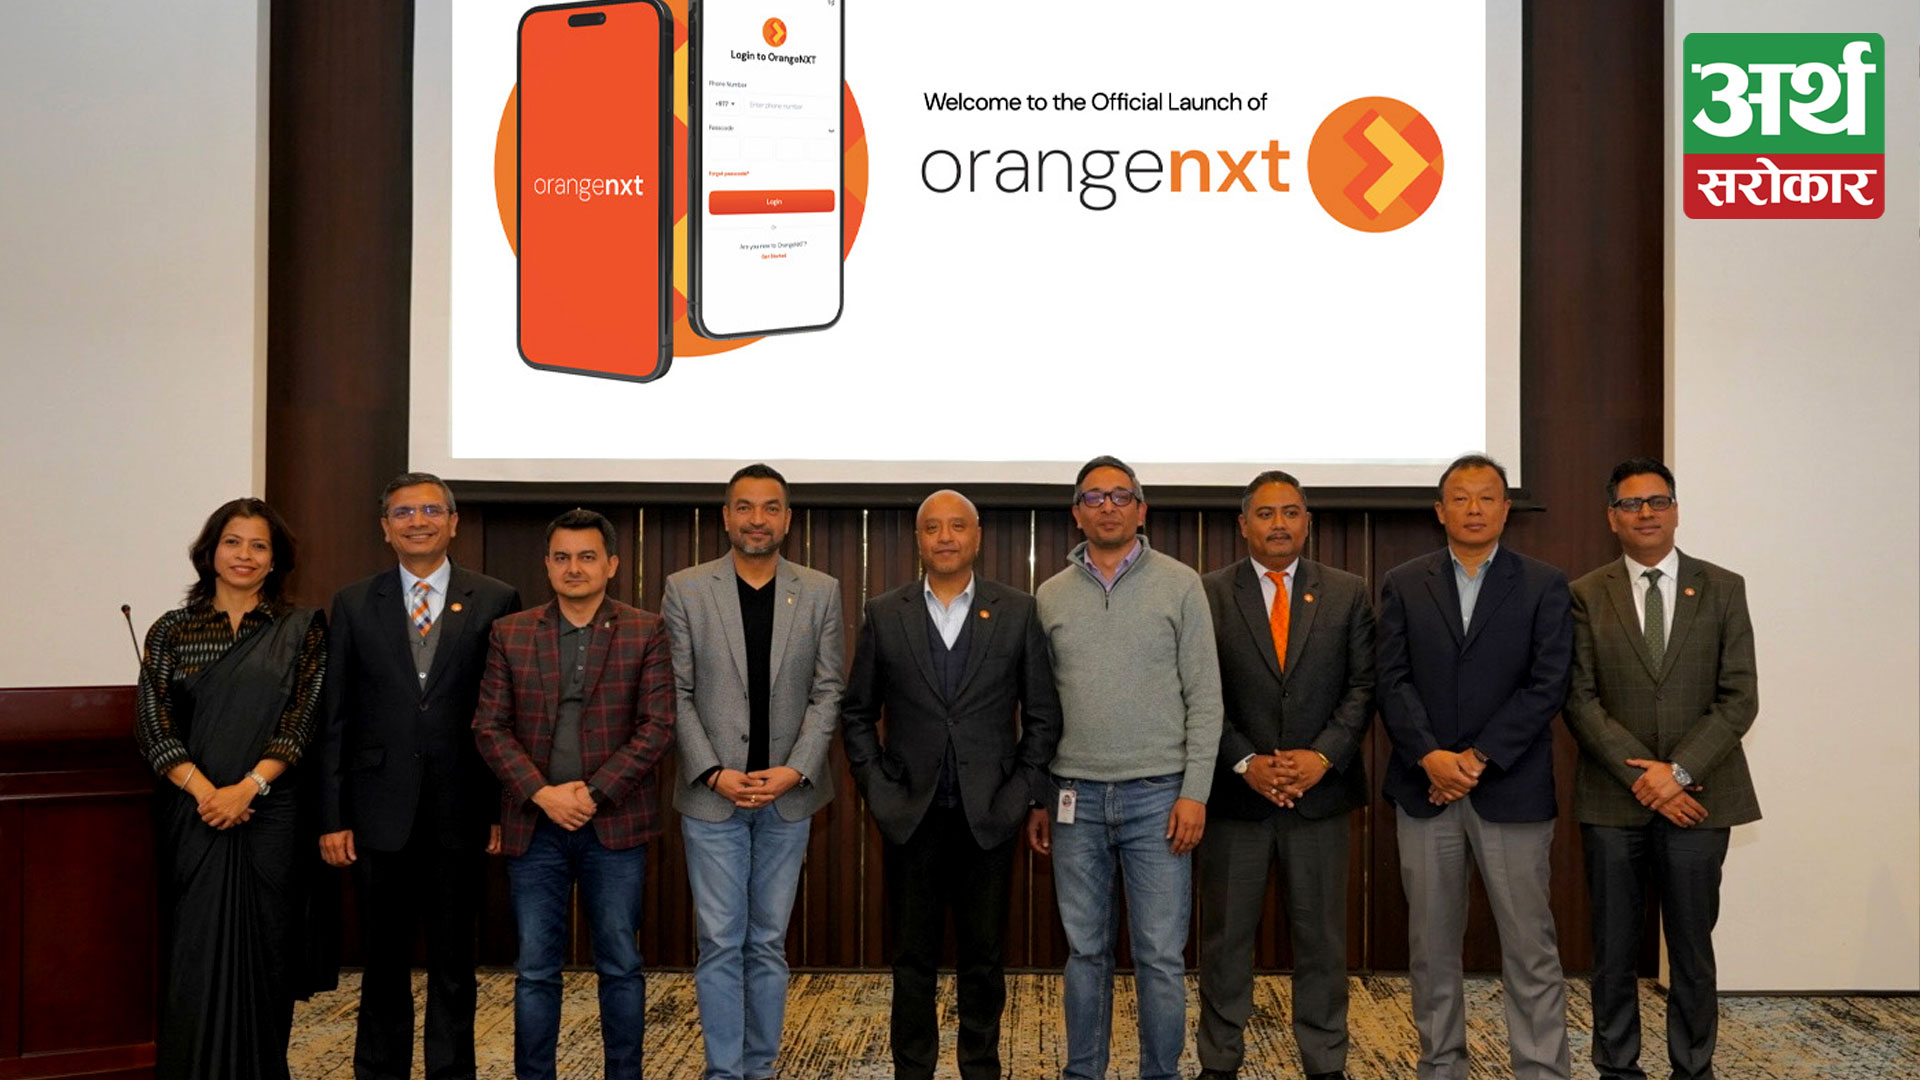 OrangeNXT-Laxmi Sunrise revolutionizes the digital banking experience